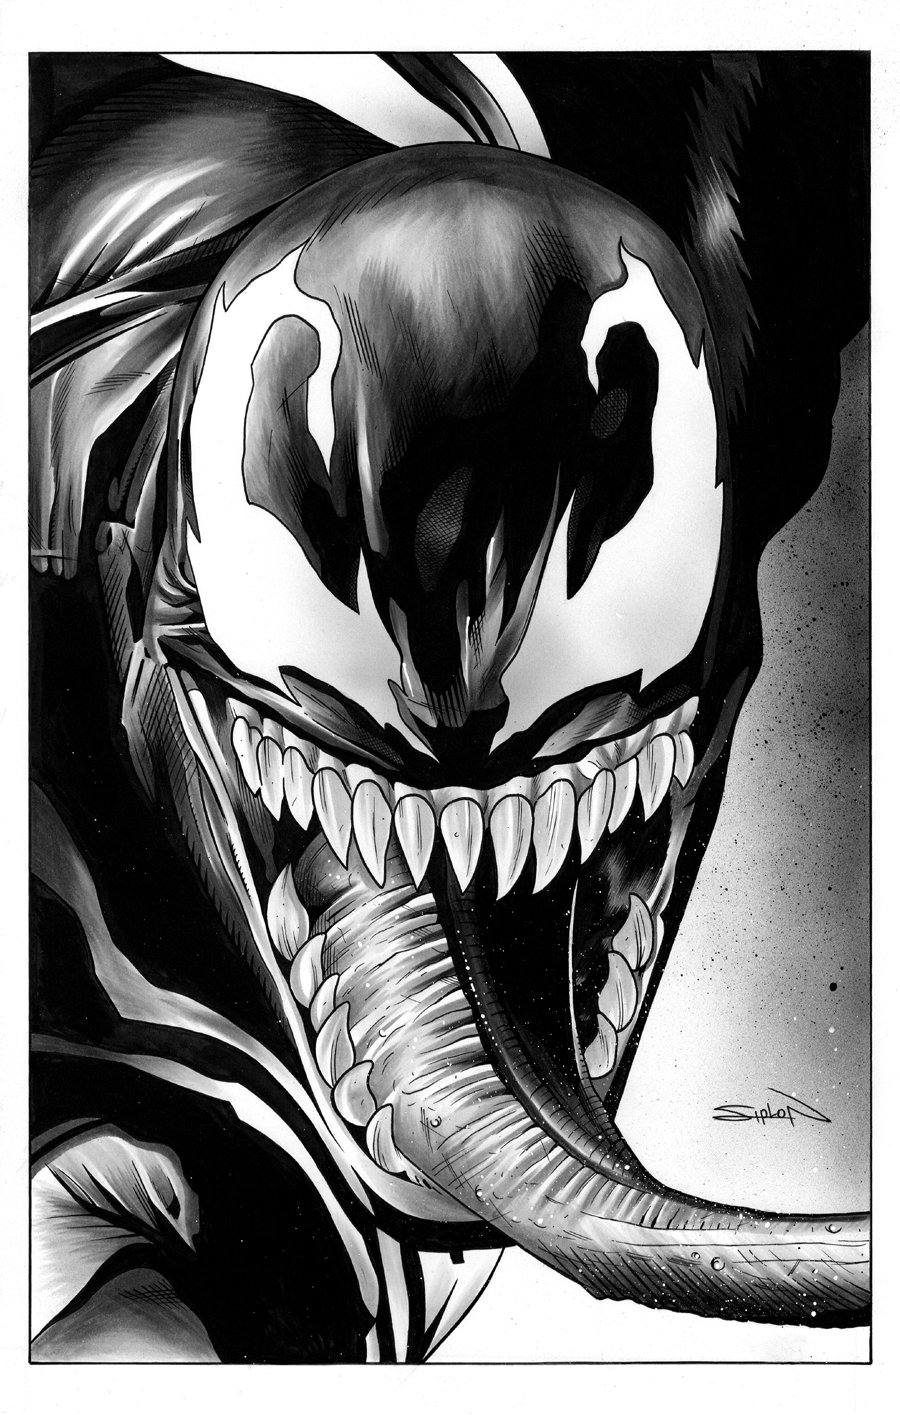 Venom by RandySiplon on DeviantArt